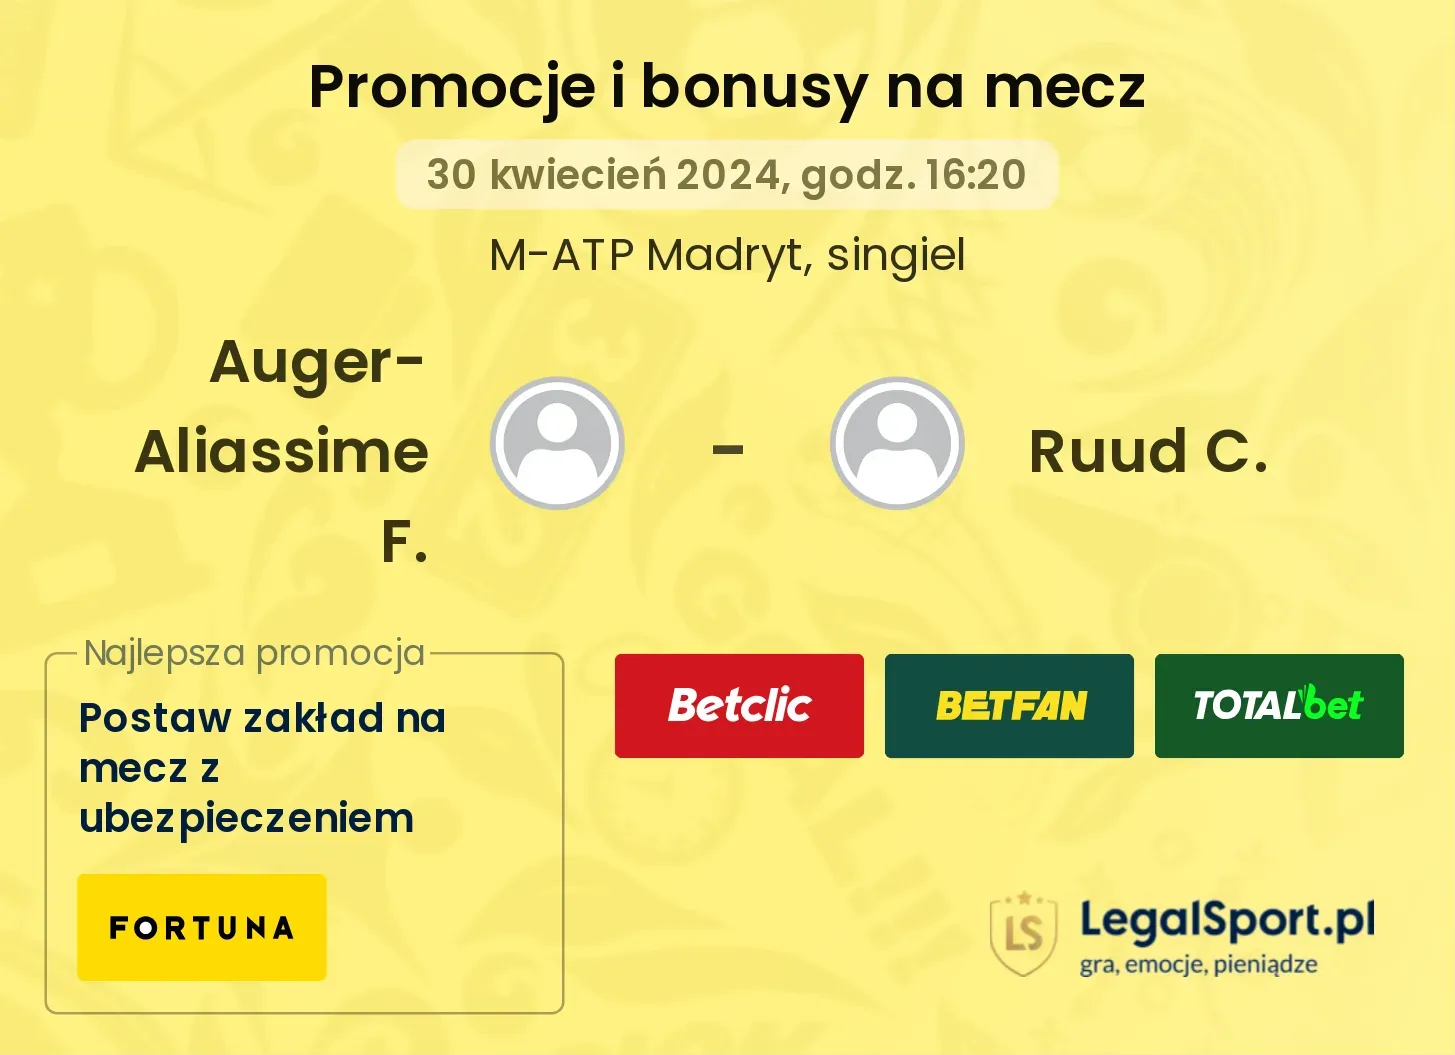 Auger-Aliassime F. - Ruud C. promocje bonusy na mecz